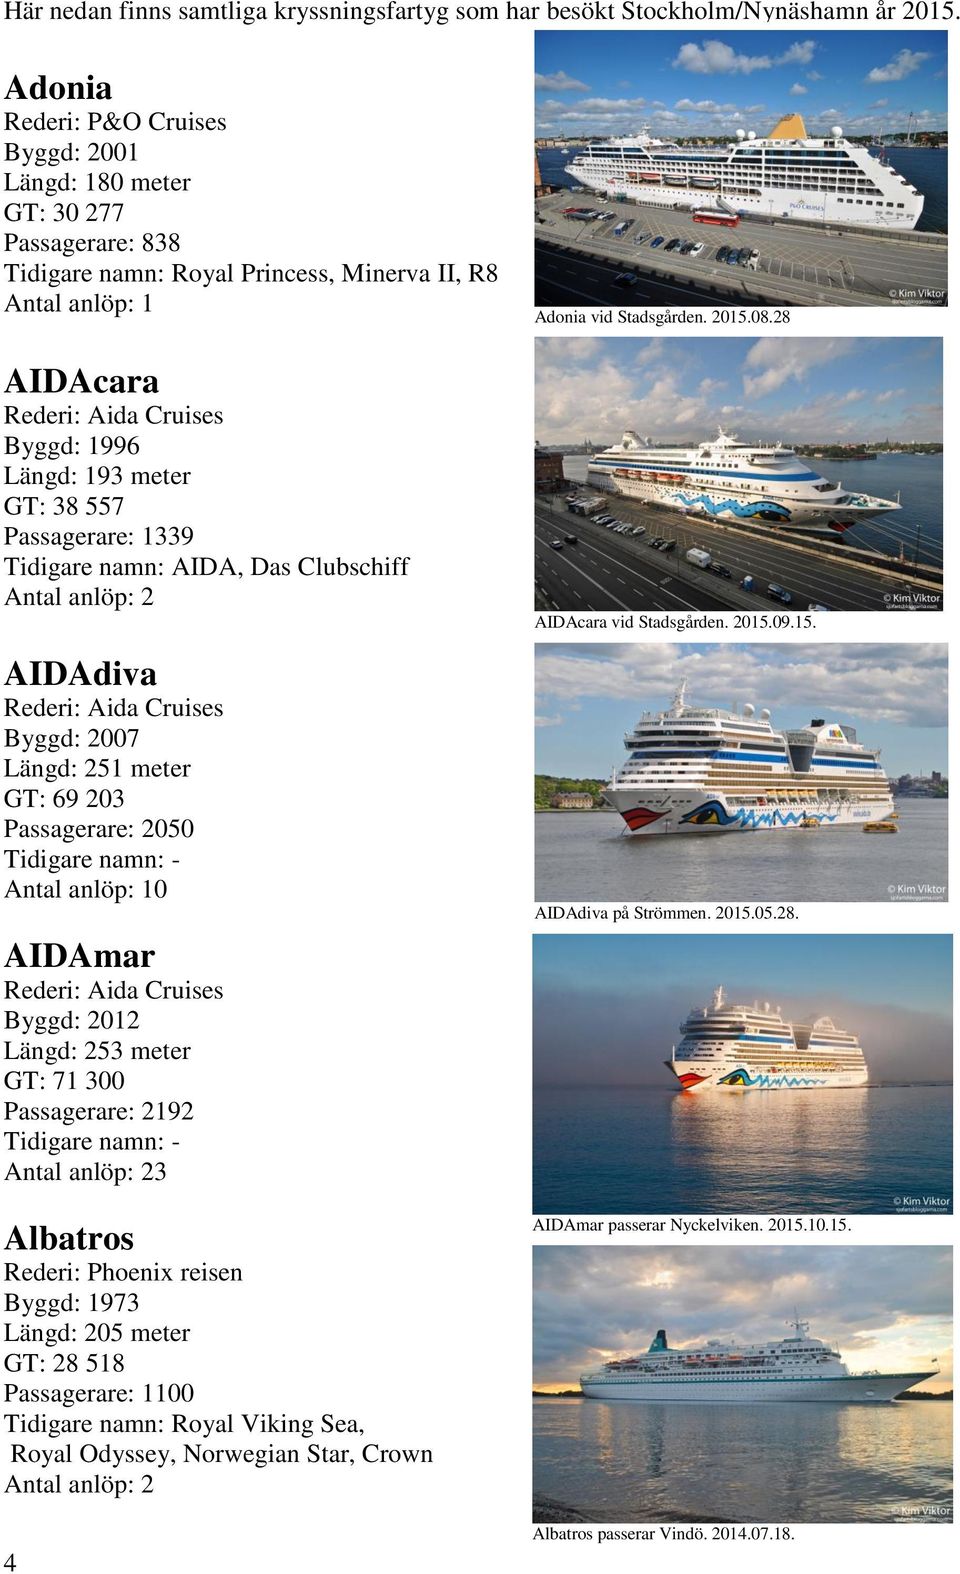 Passagerare: 1339 Tidigare namn: AIDA, Das Clubschiff AIDAdiva Rederi: Aida Cruises Byggd: 2007 Längd: 251 meter GT: 69 203 Passagerare: 2050 0 AIDAmar Rederi: Aida Cruises Byggd: 2012 Längd: 253